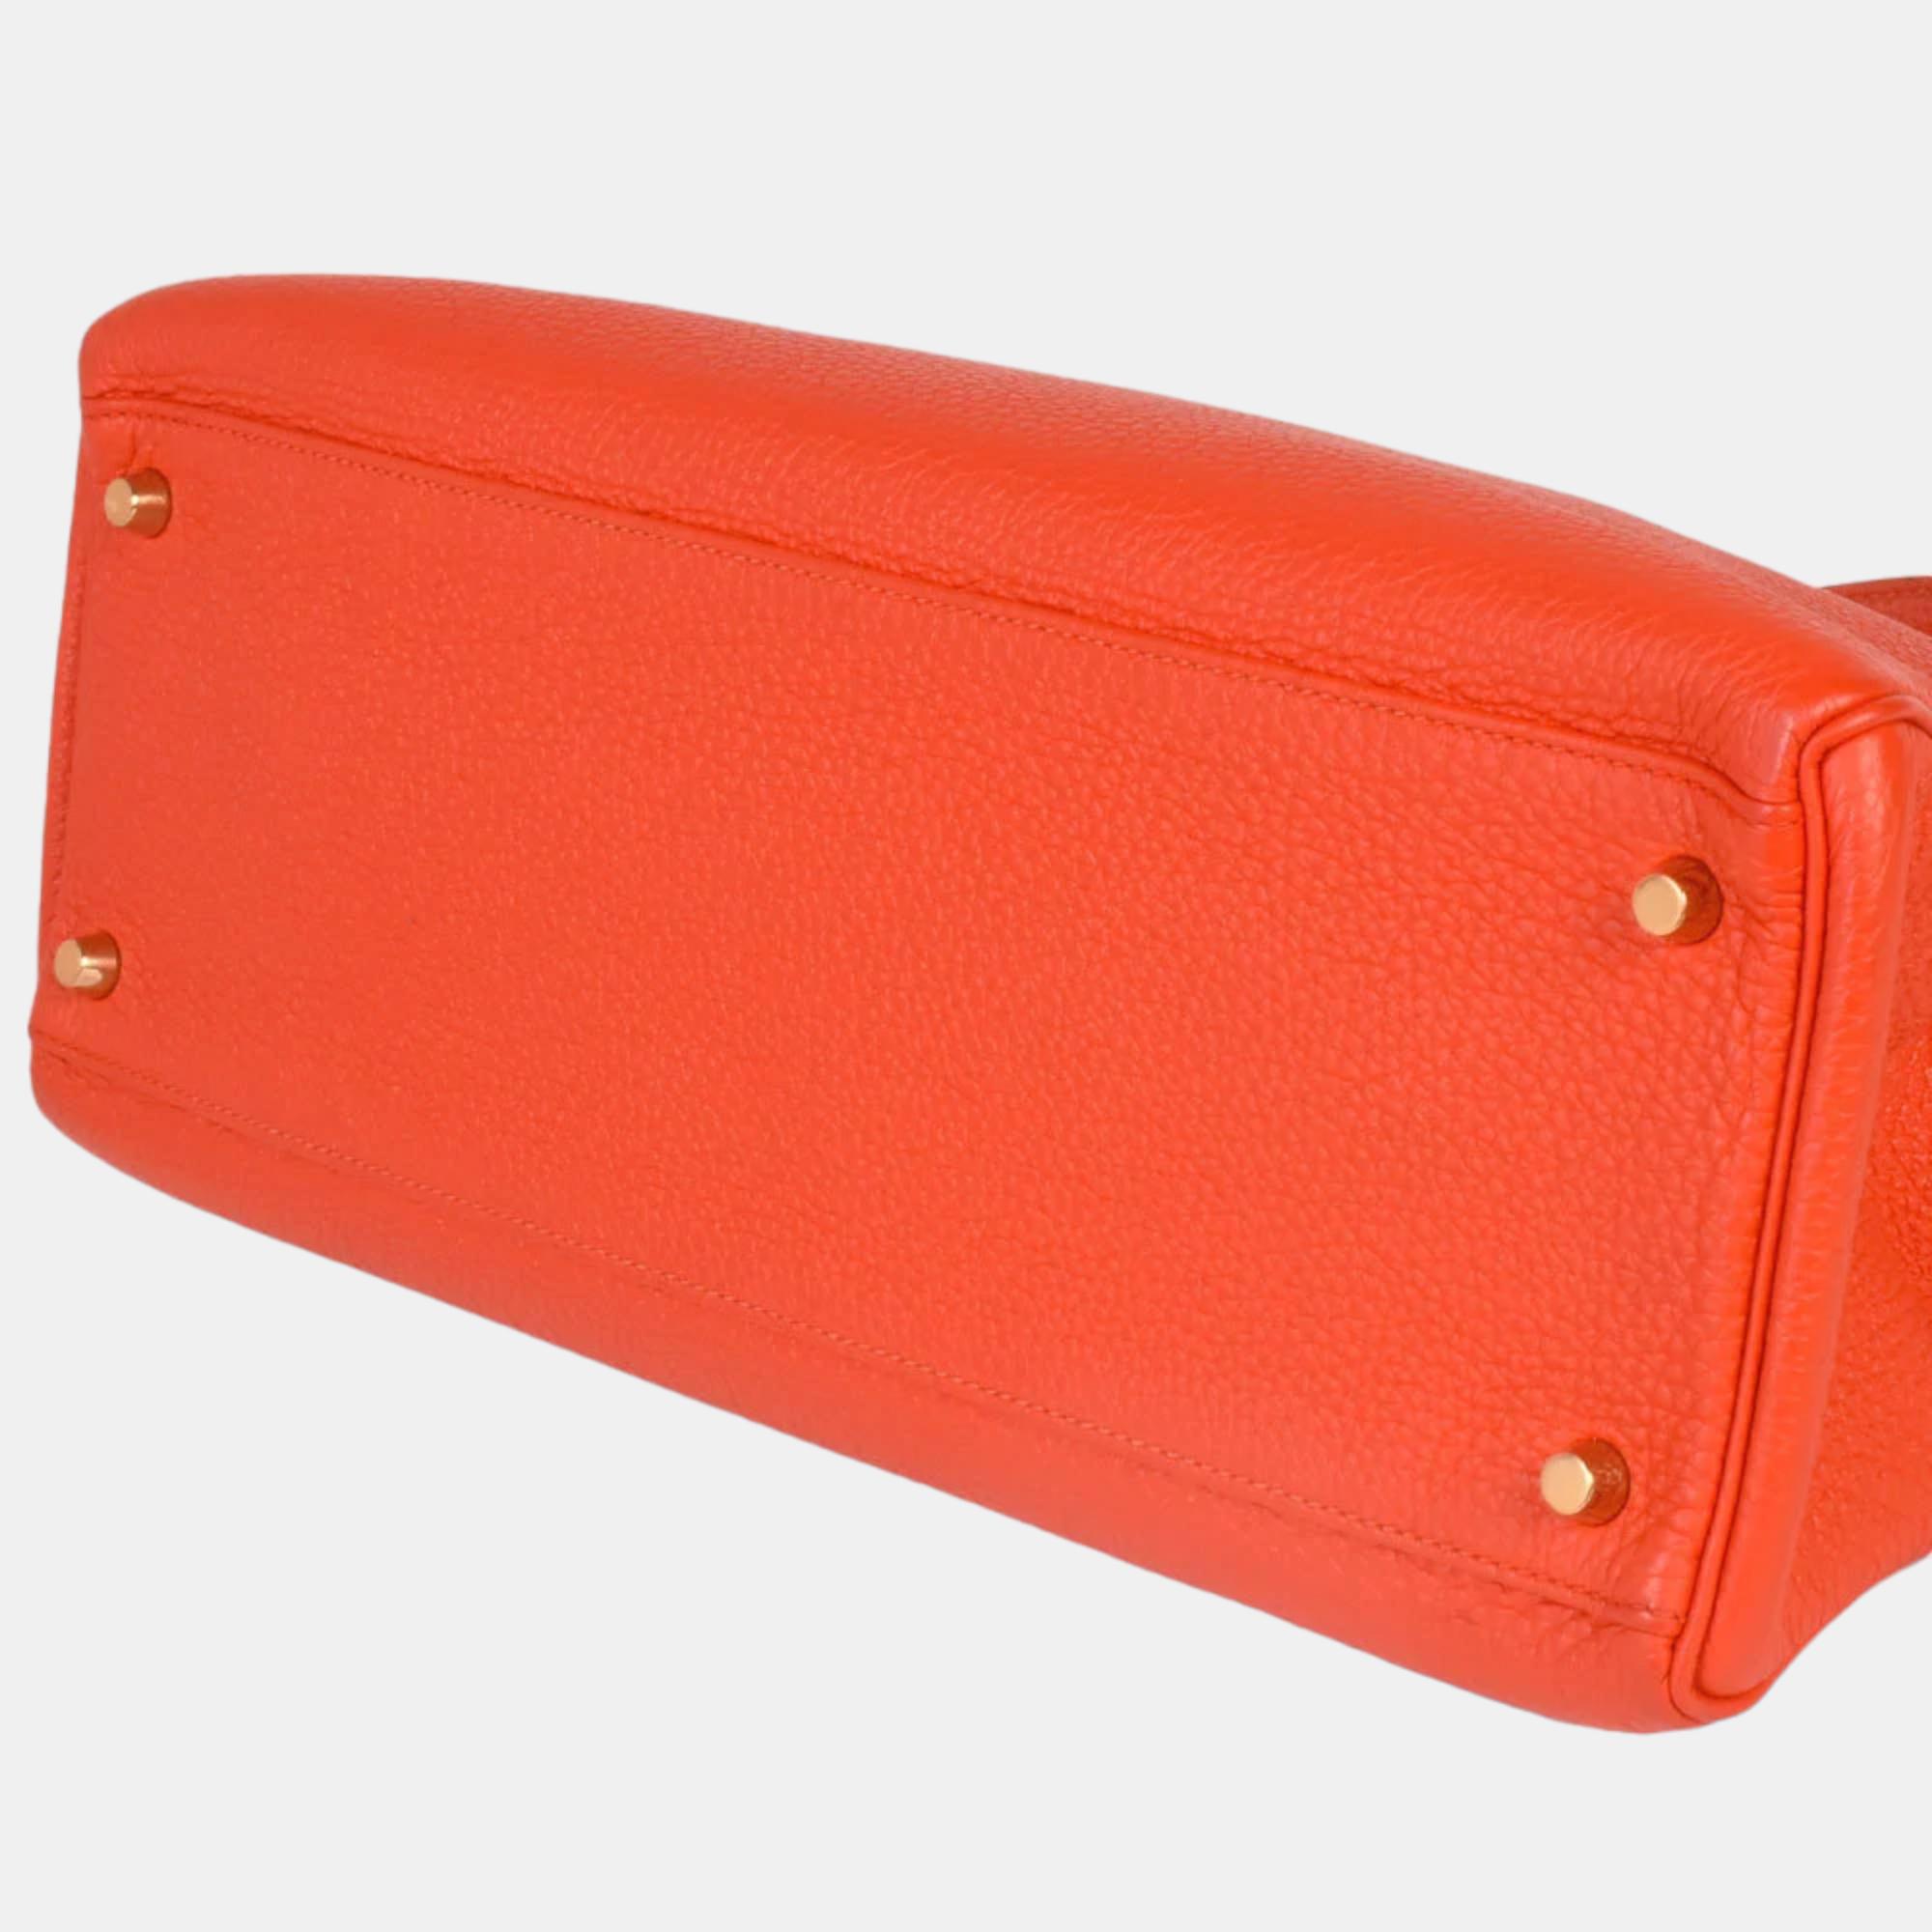 Hermes Kelly 35 Inner Sewing Capucines Togo Q Engraved (manufactured In 2013) Handbag